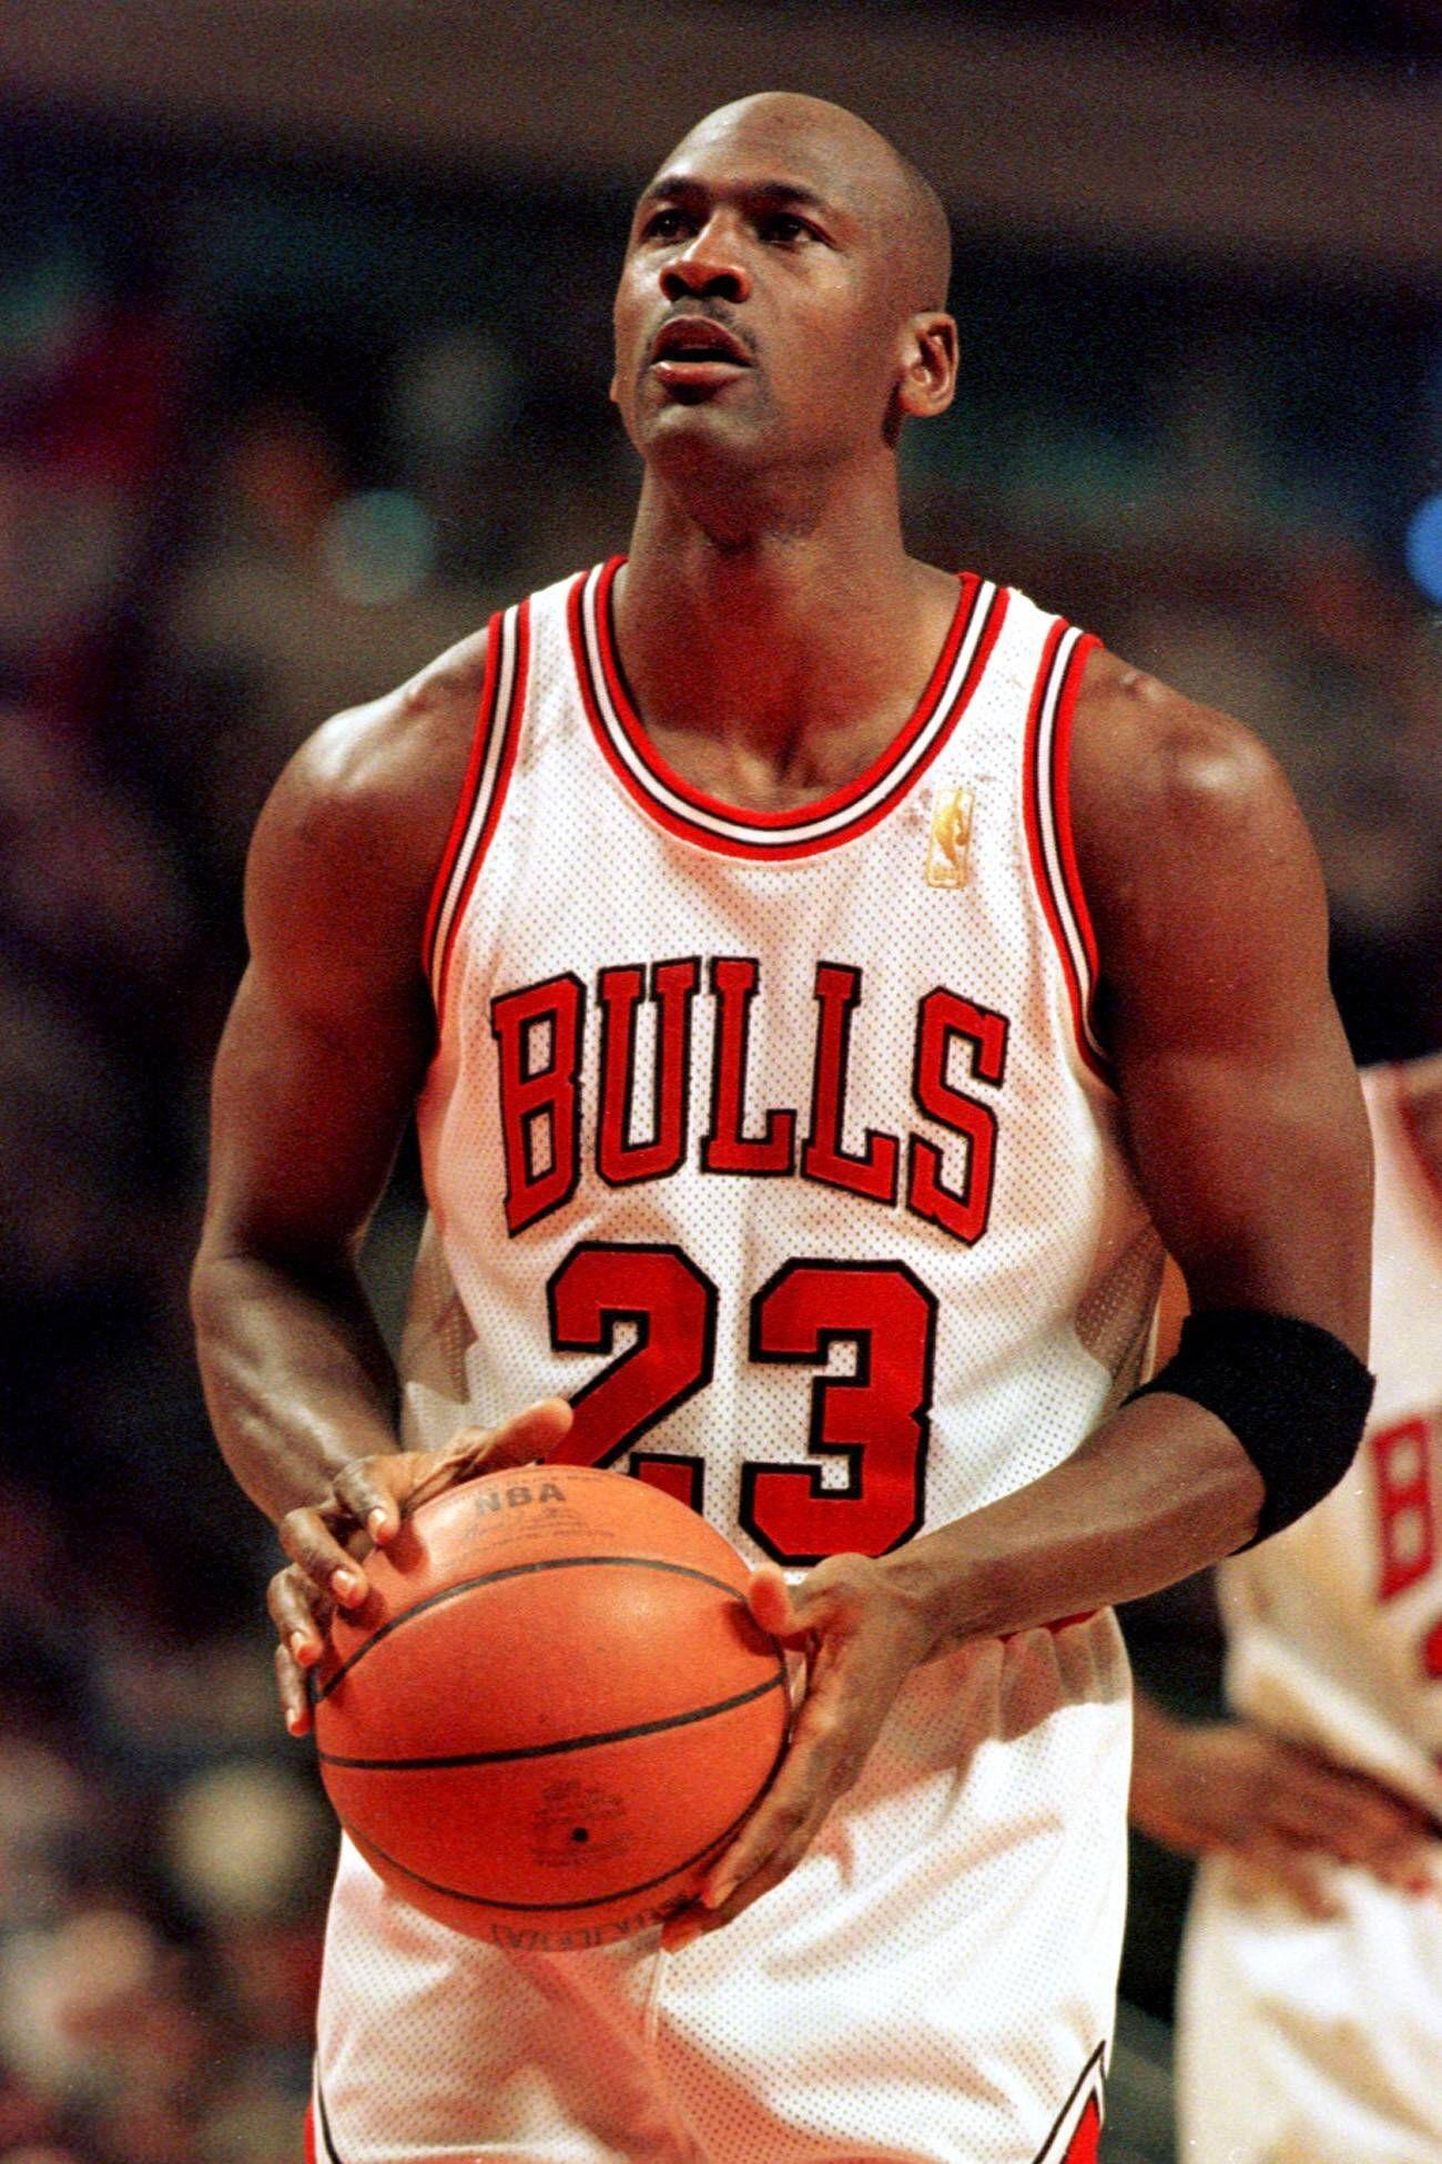 Legend Michael Jordan.